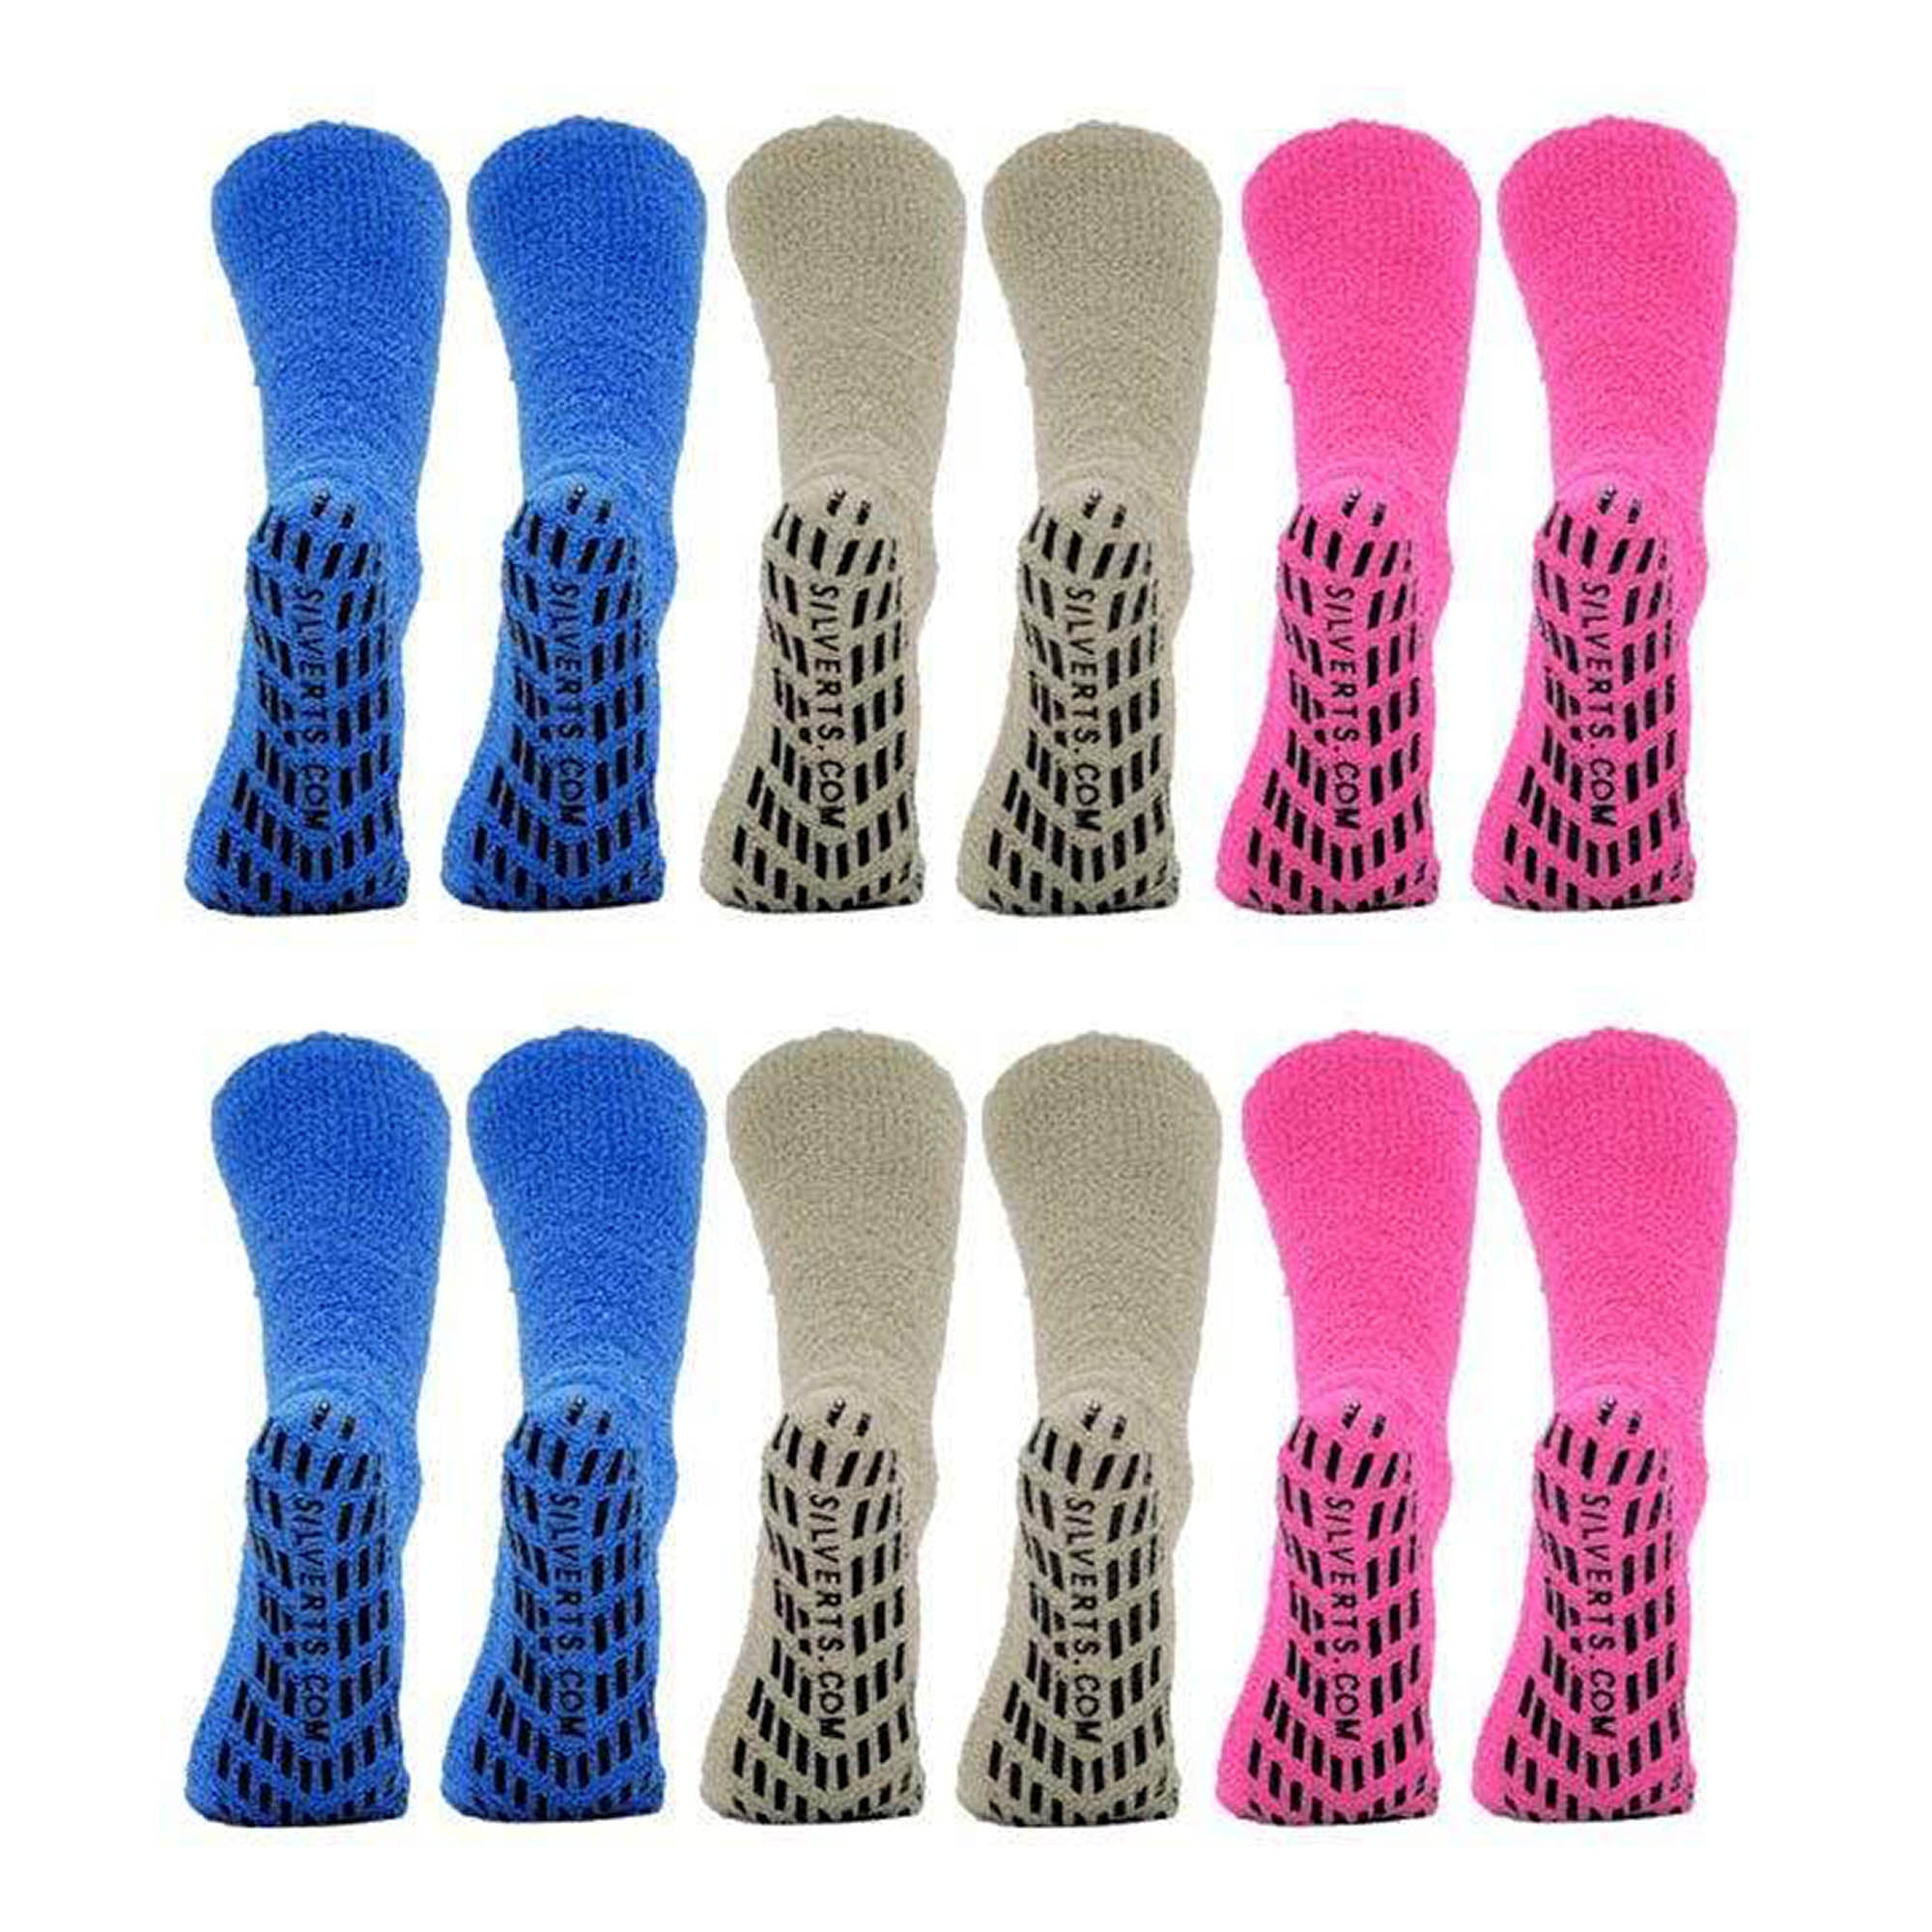 Silverts Slipper Socks - Set Of 6 - Women's Pack - XL